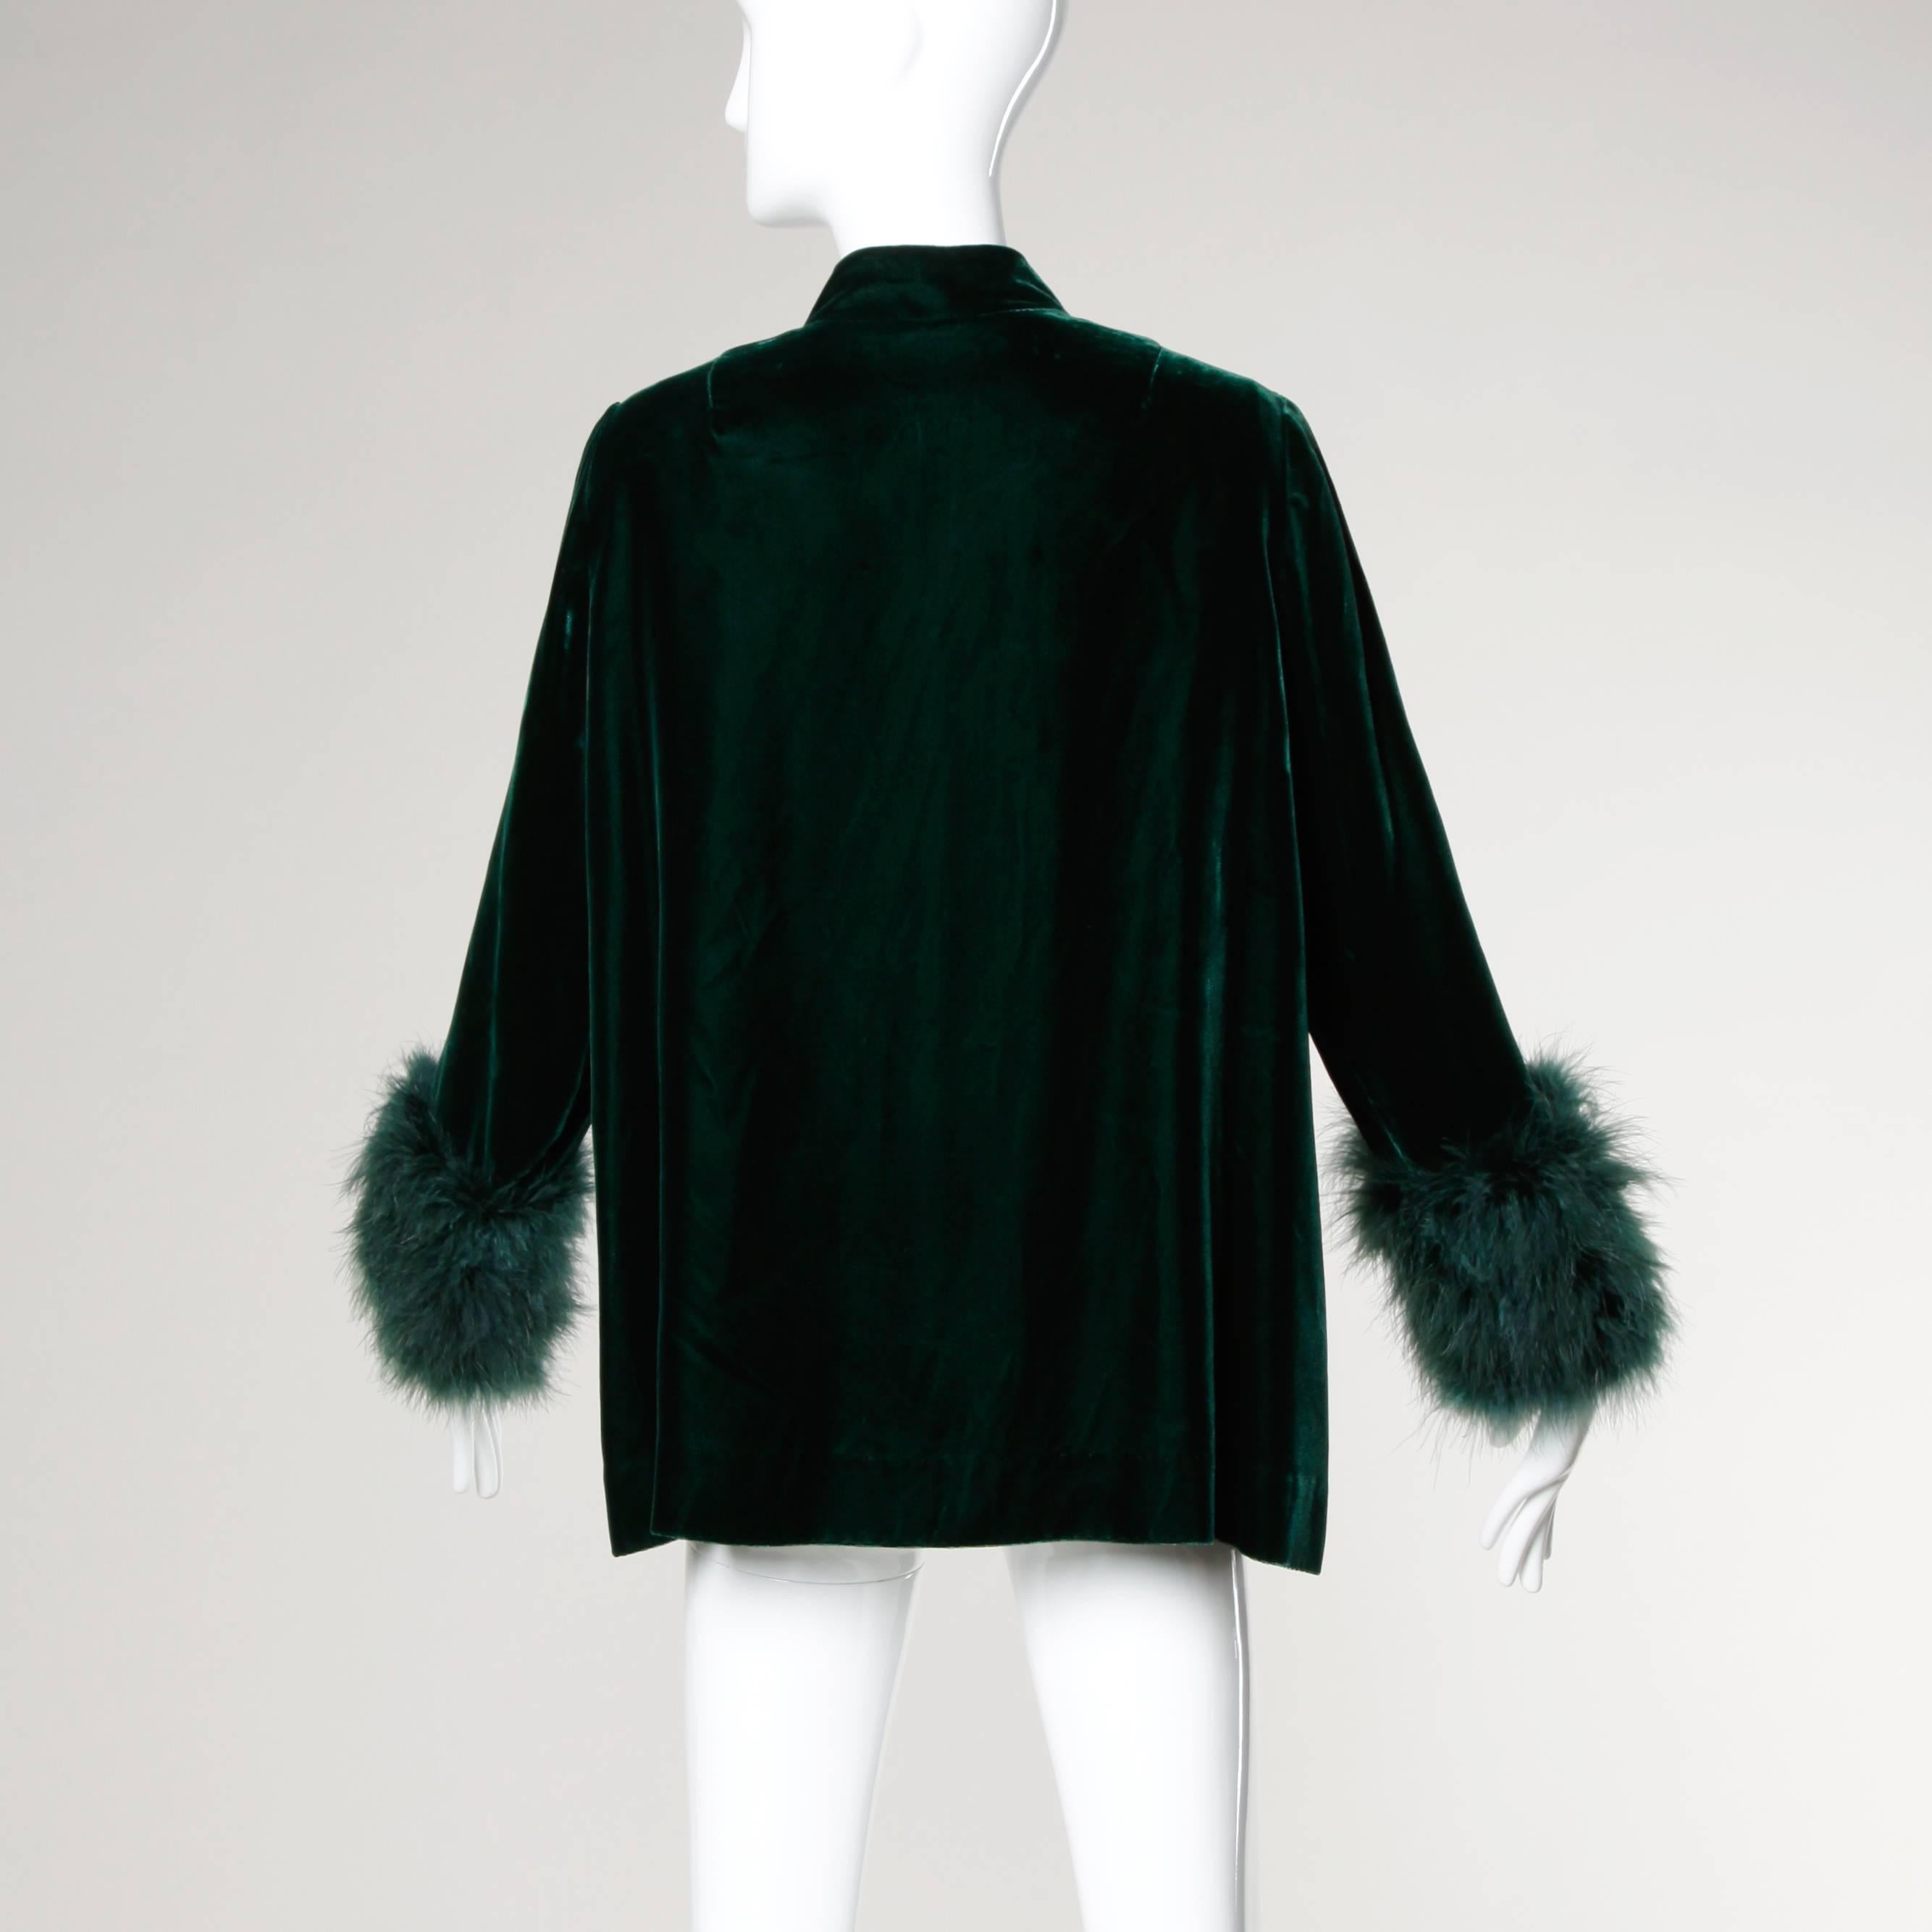 Black 1970s Lilli Diamond Vintage Green Velvet Jacket with Feather Cuffs